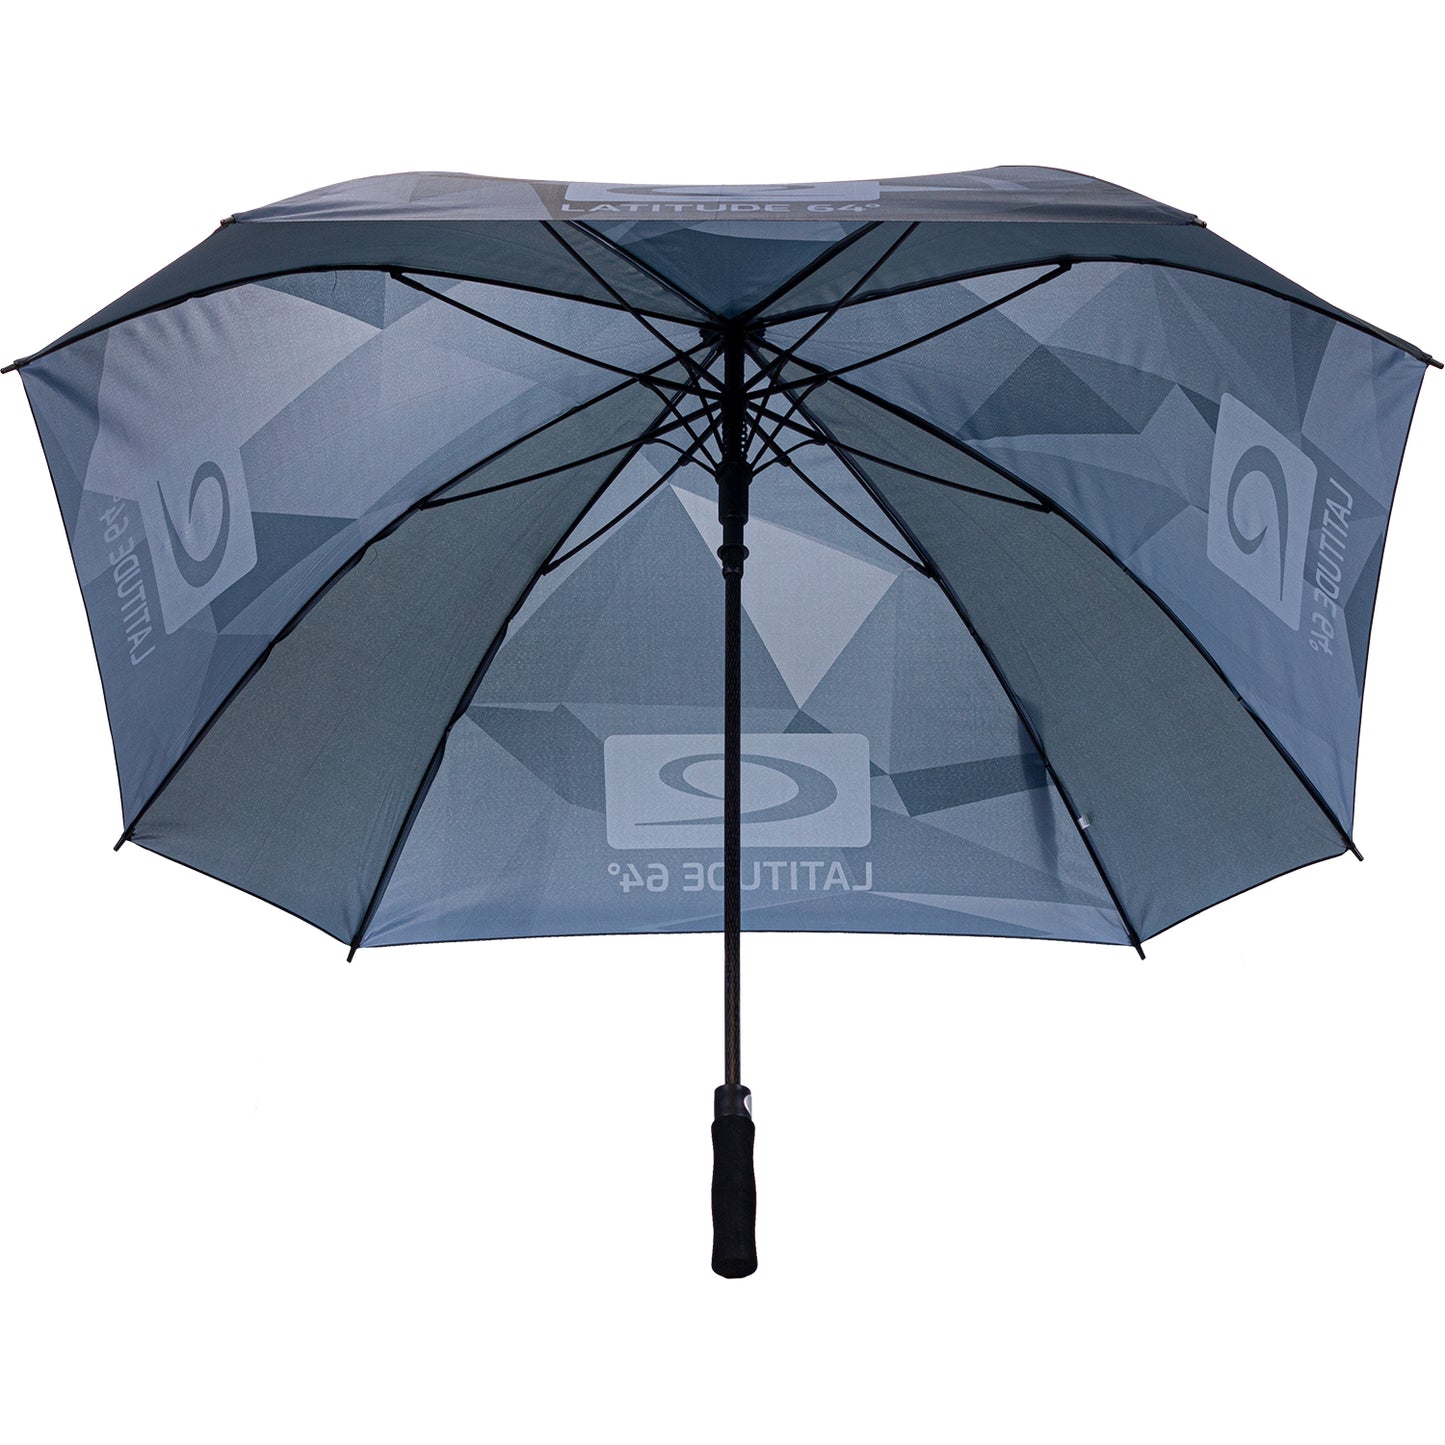 Latitude 64 60" ARC Umbrella - Gray Camo